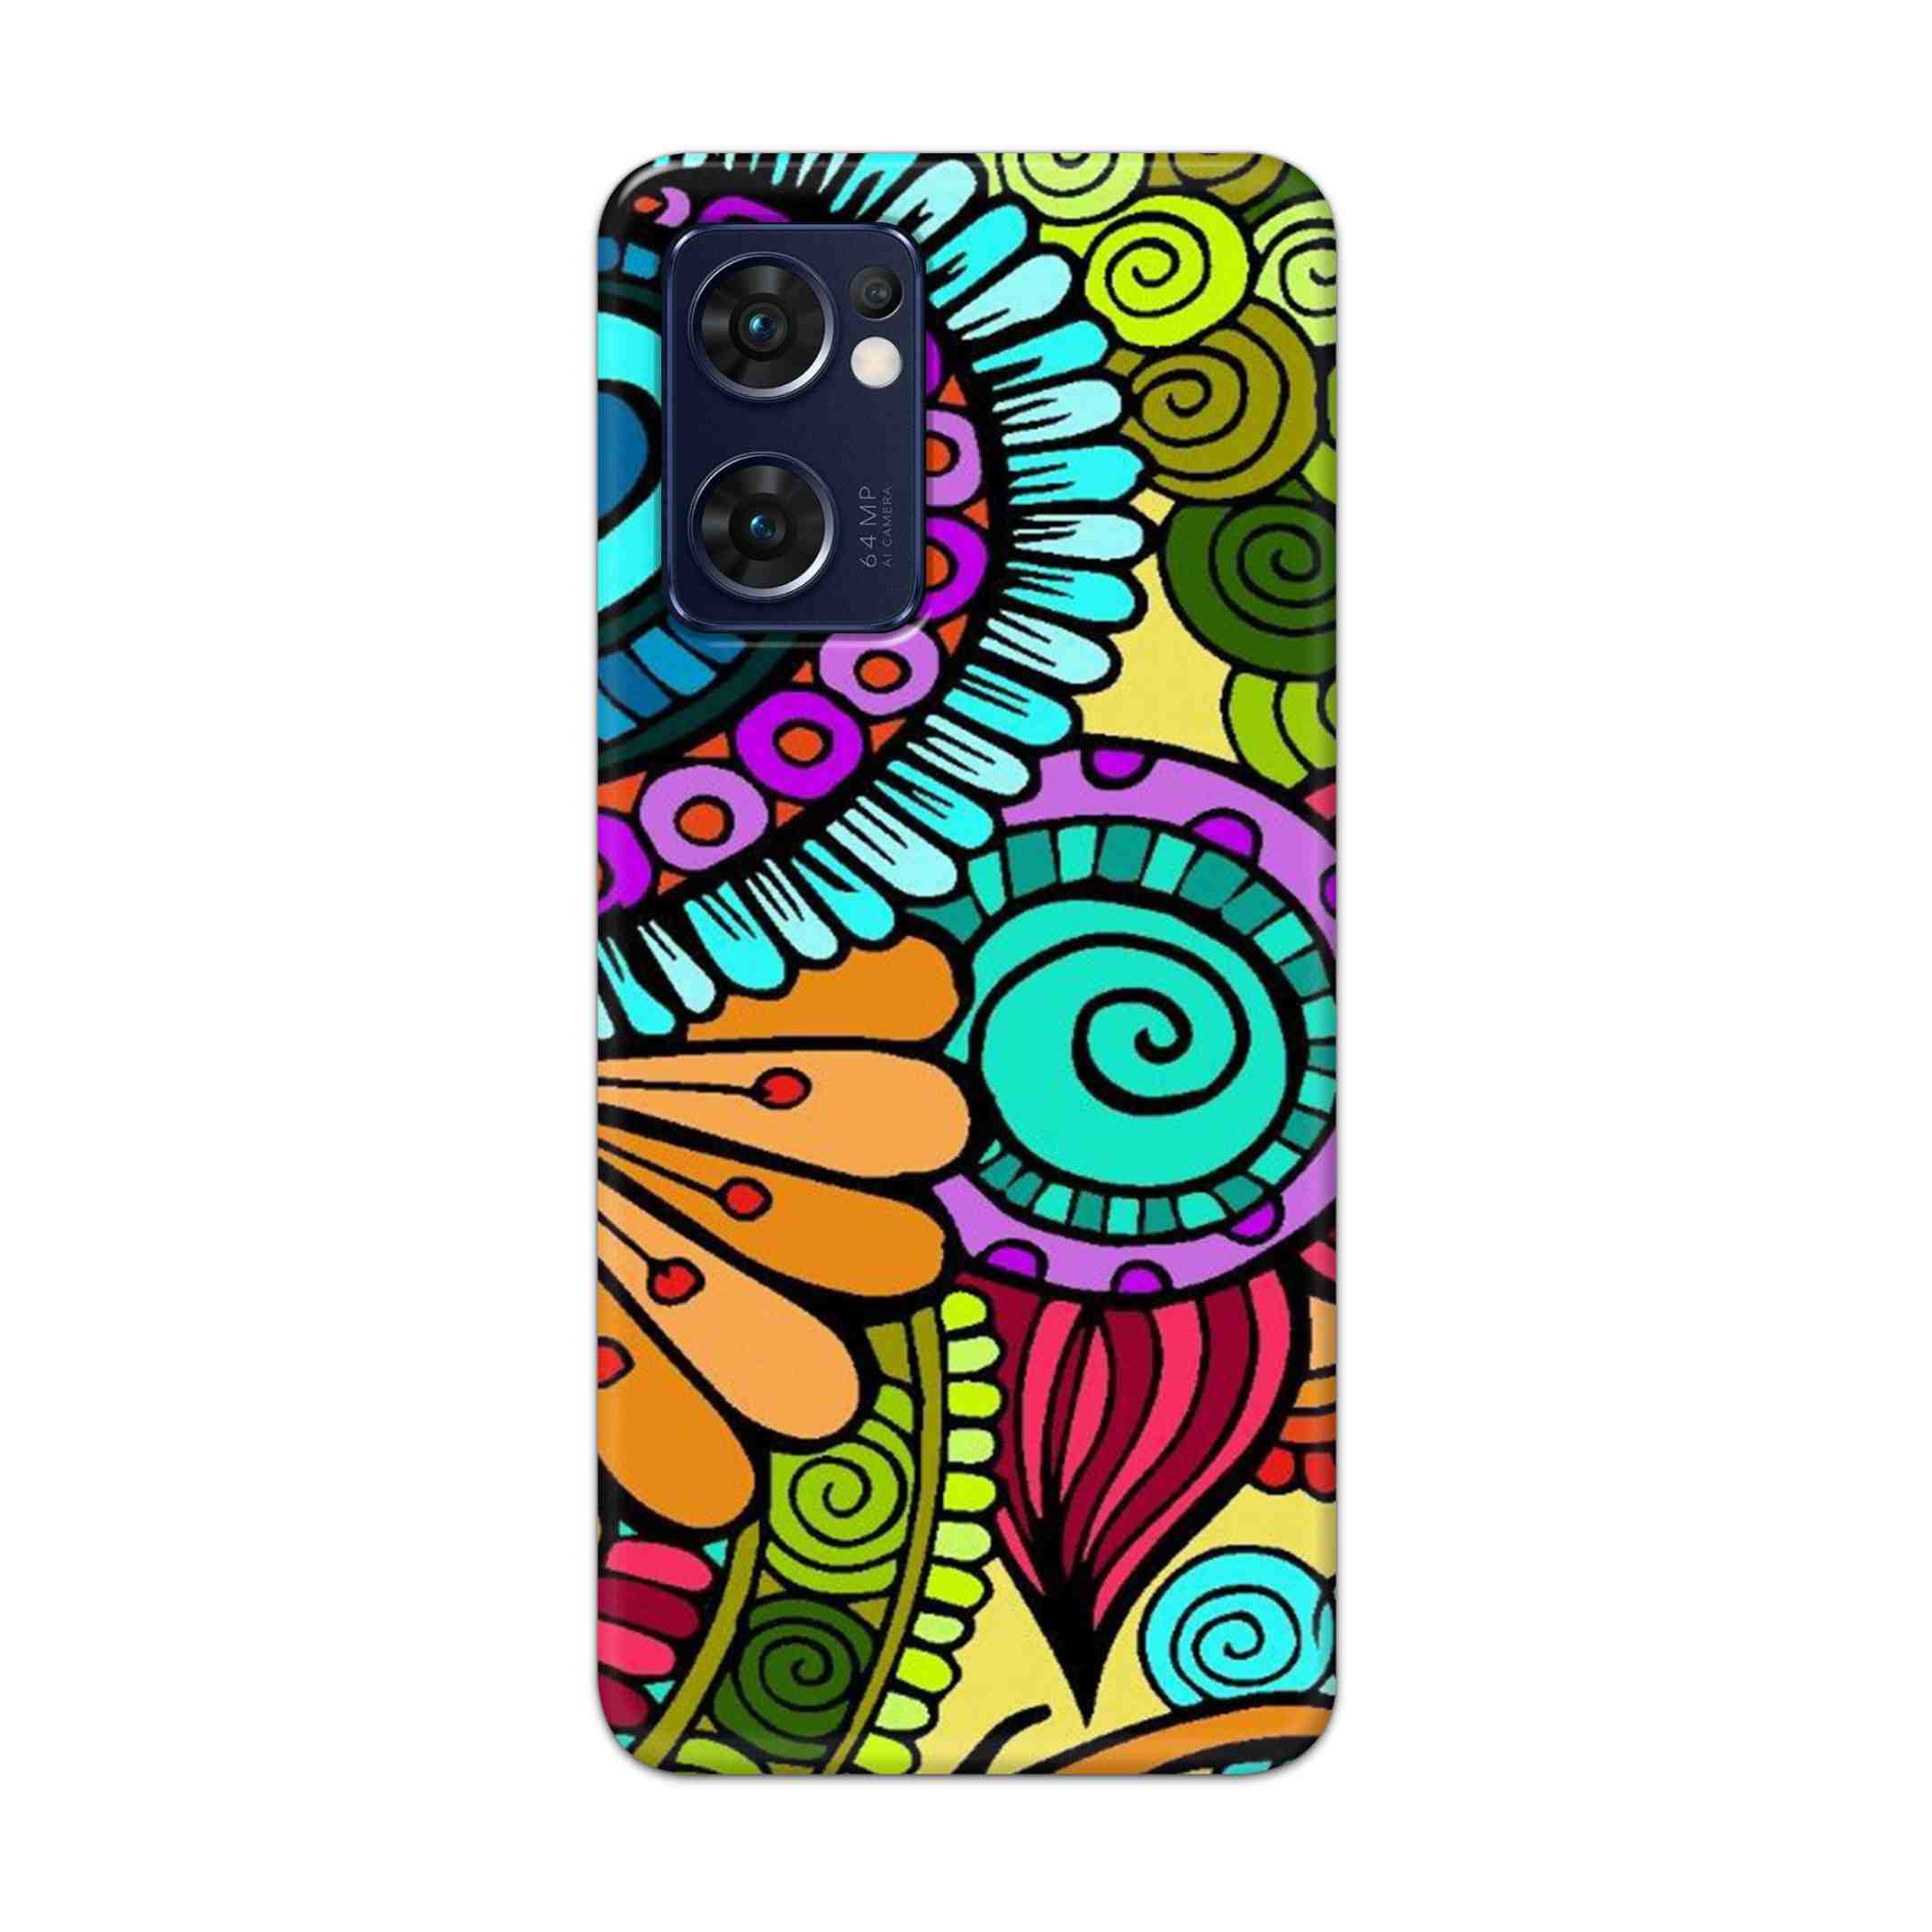 Buy The Kalachakra Mandala Hard Back Mobile Phone Case Cover For Reno 7 5G Online